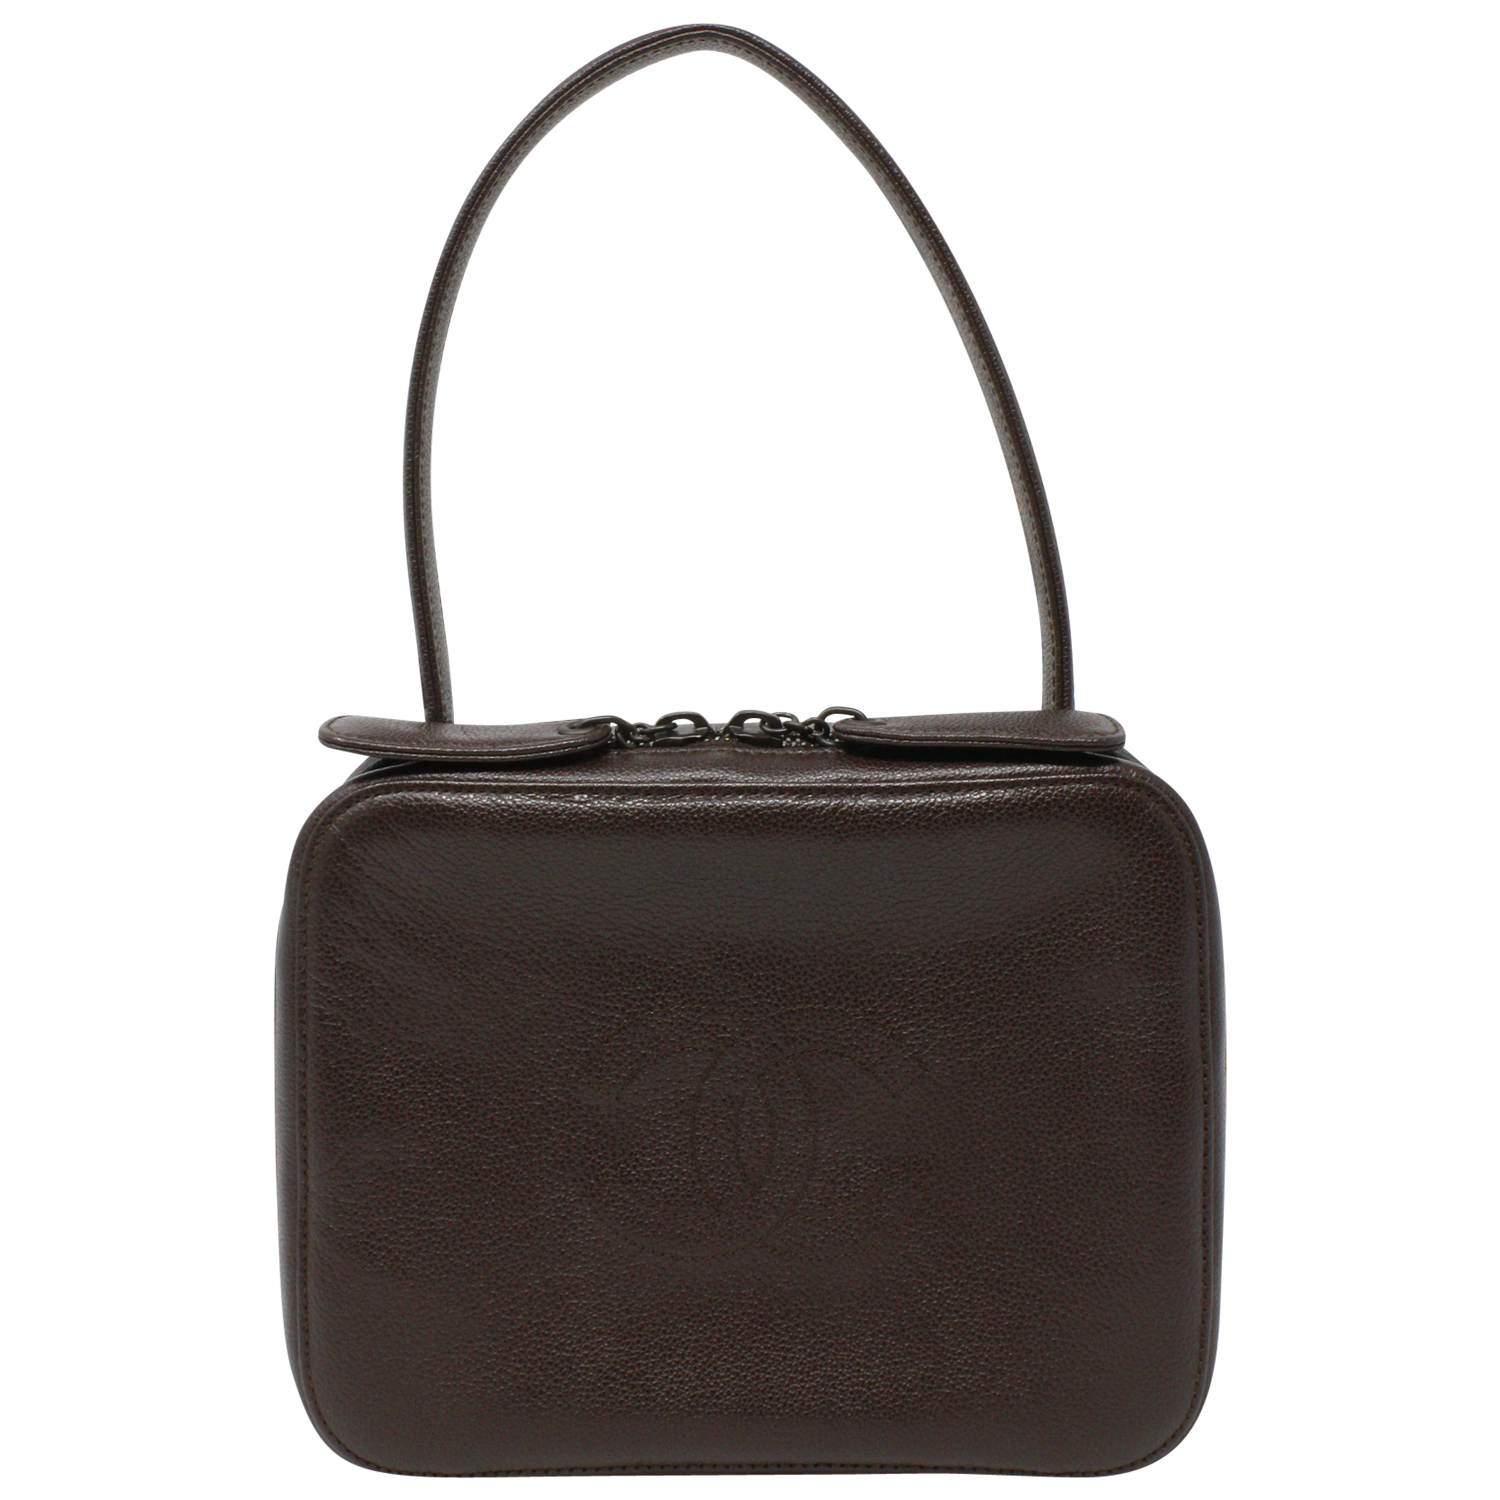 Chanel 90s Brown CC Box Bag